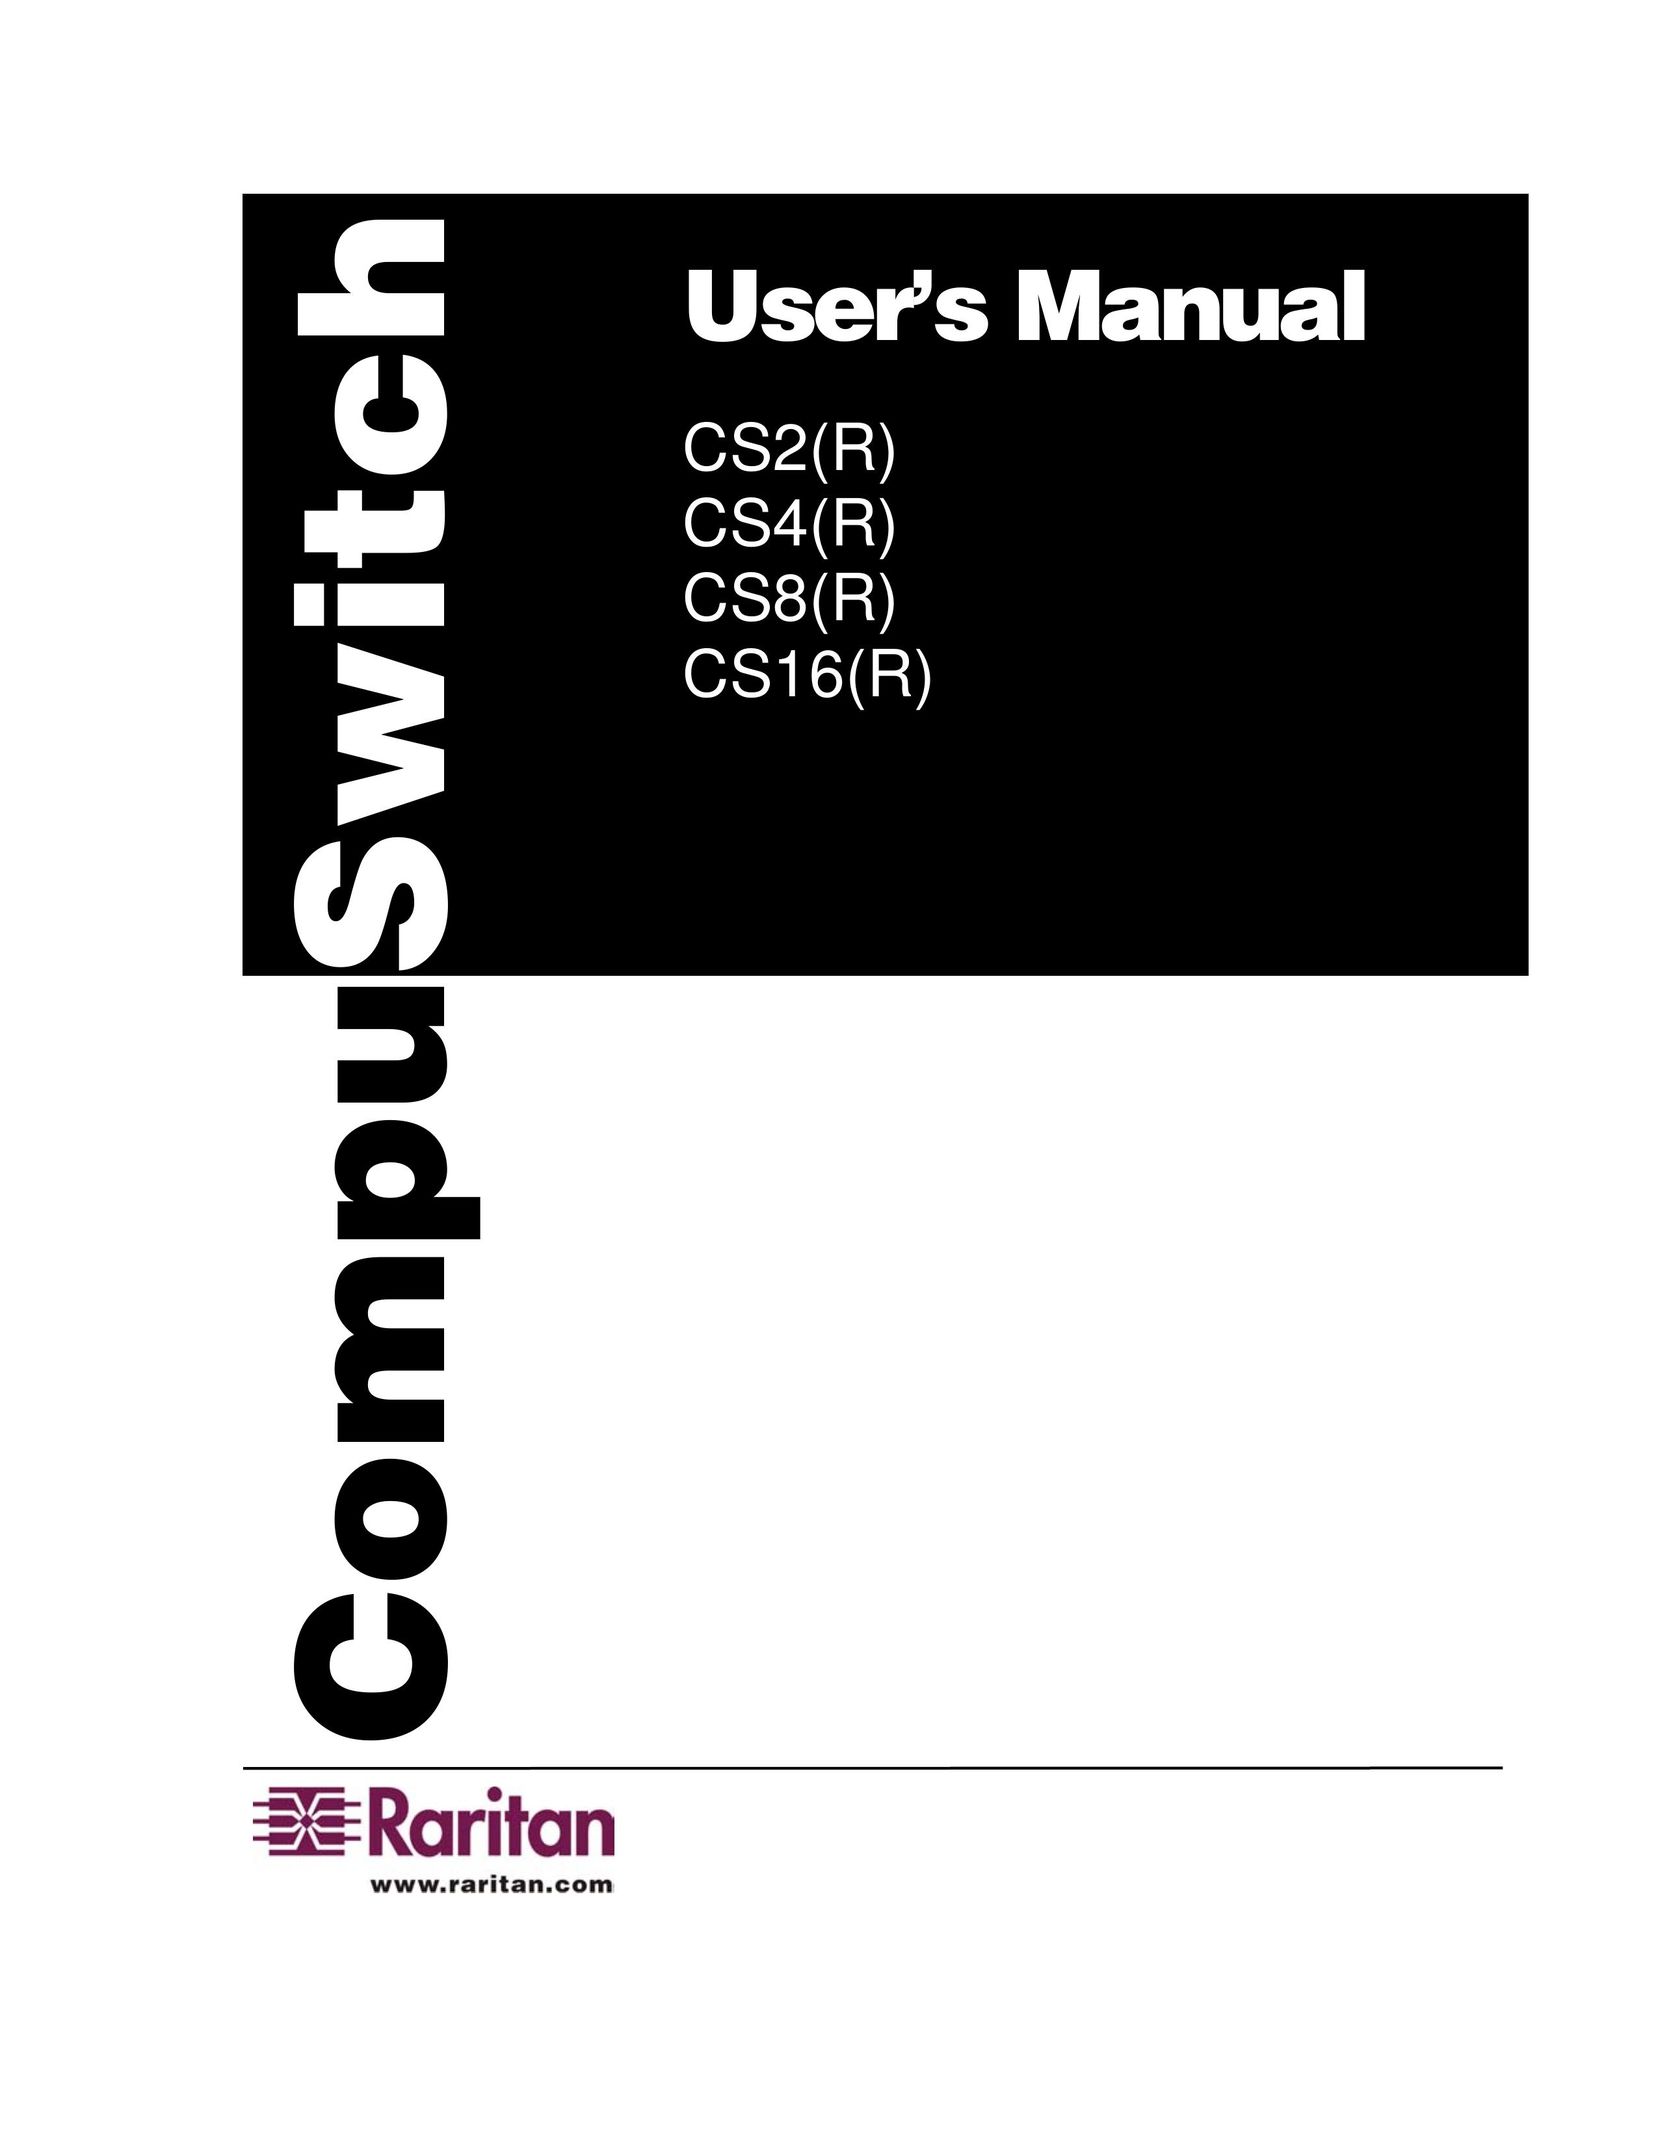 Raritan Engineering CS8(R) Switch User Manual